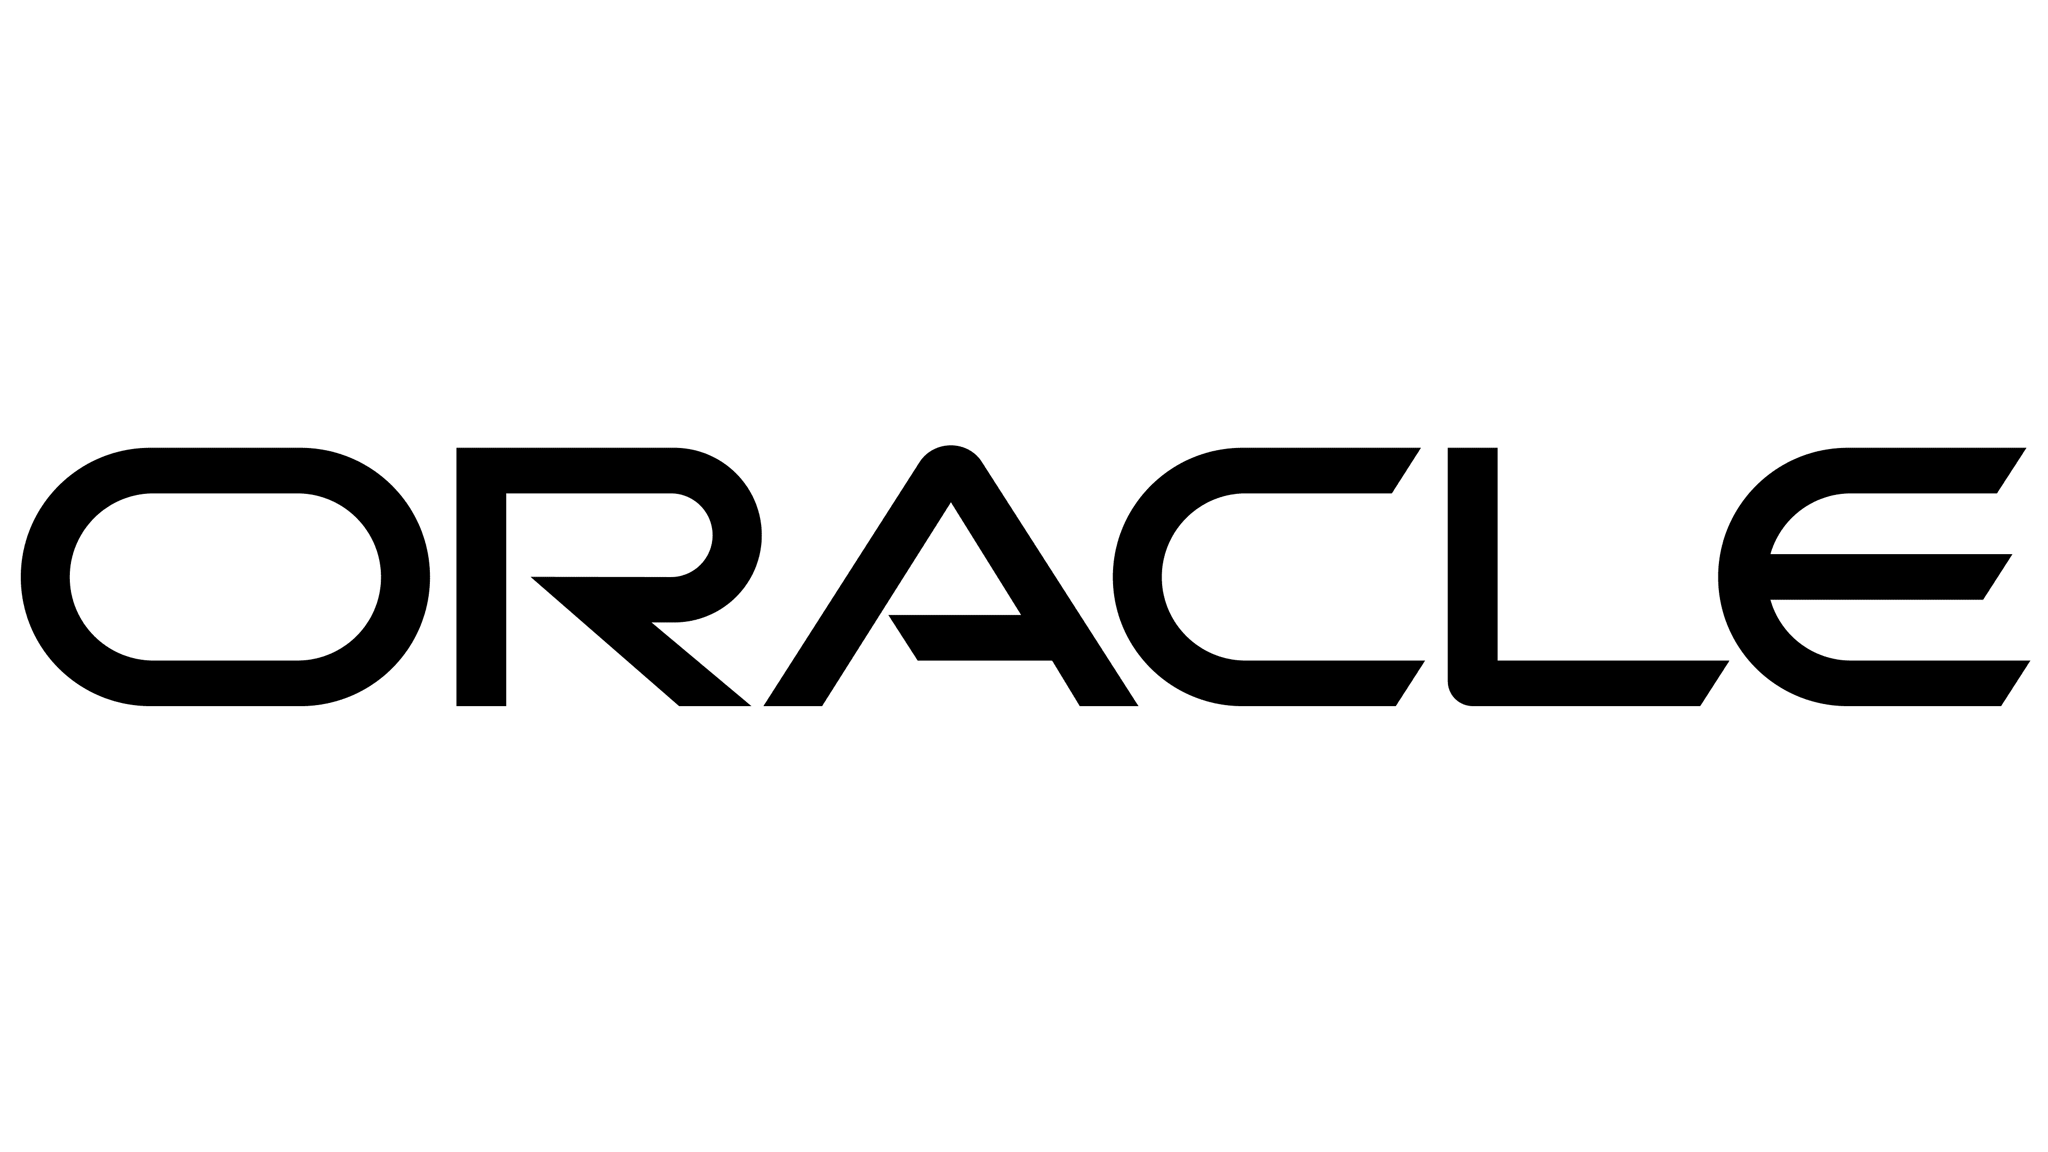 Oracle logo black